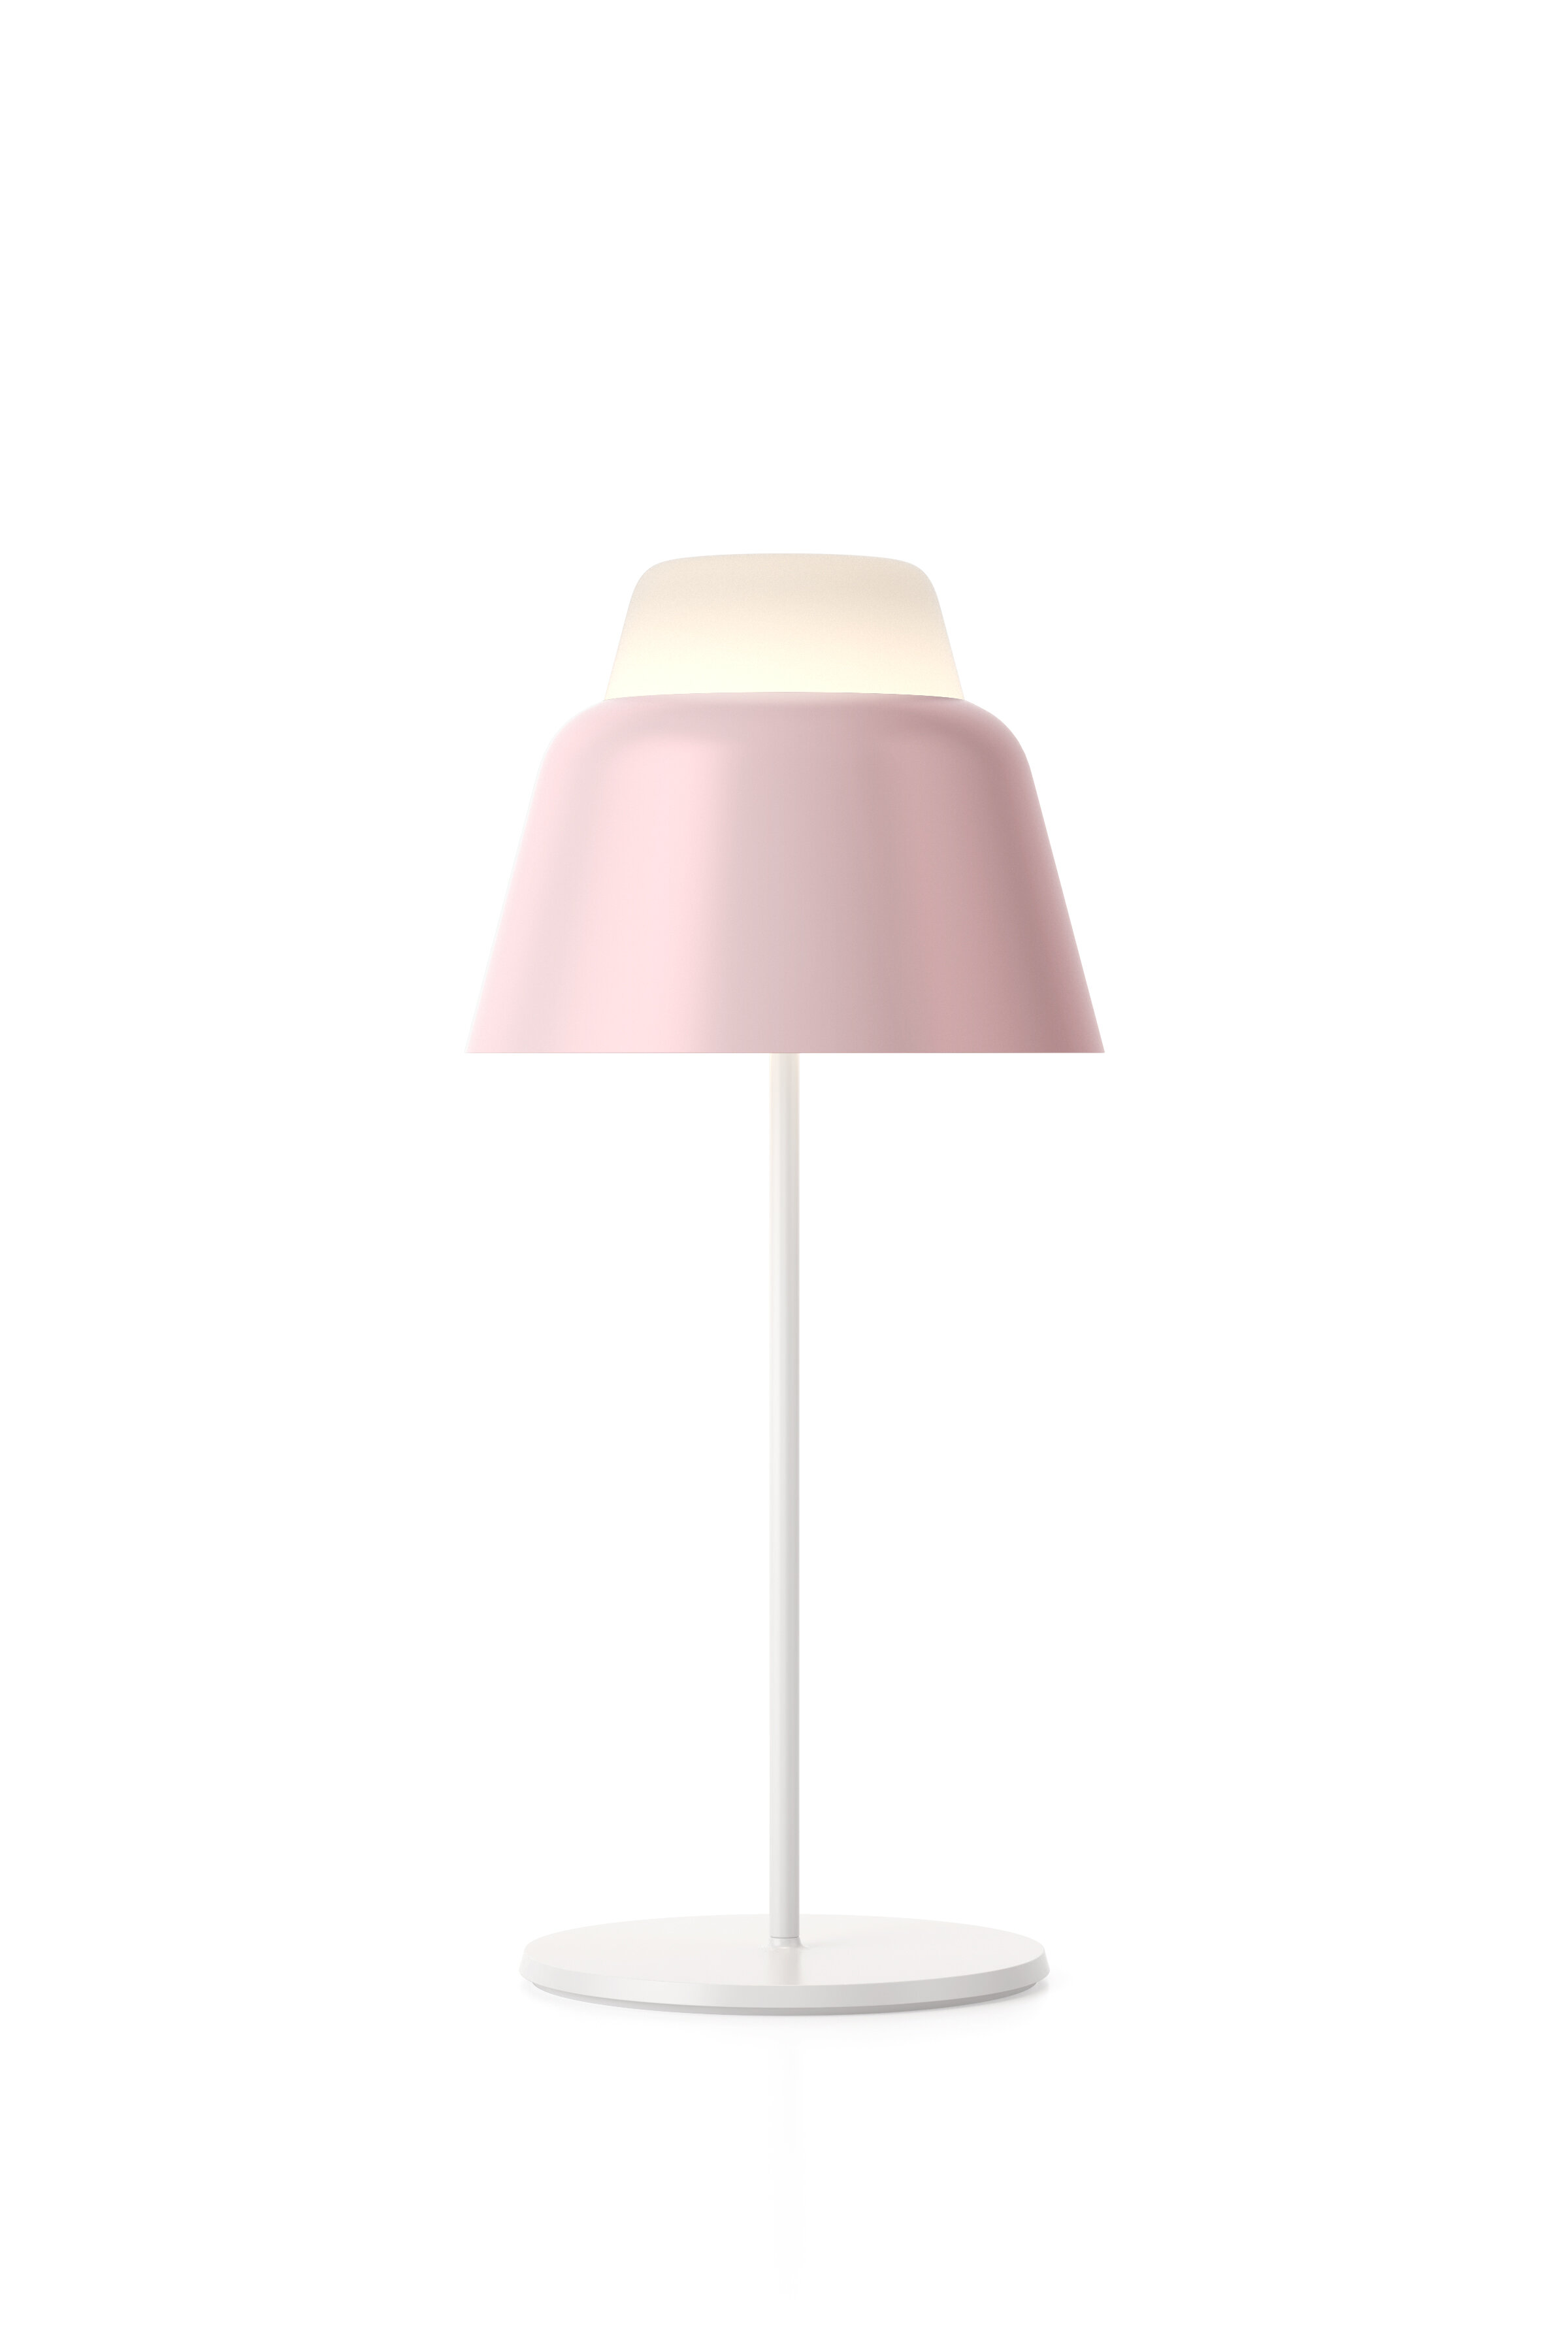 teo-modu-table-lamp-matte-pink-on-cutout.jpg